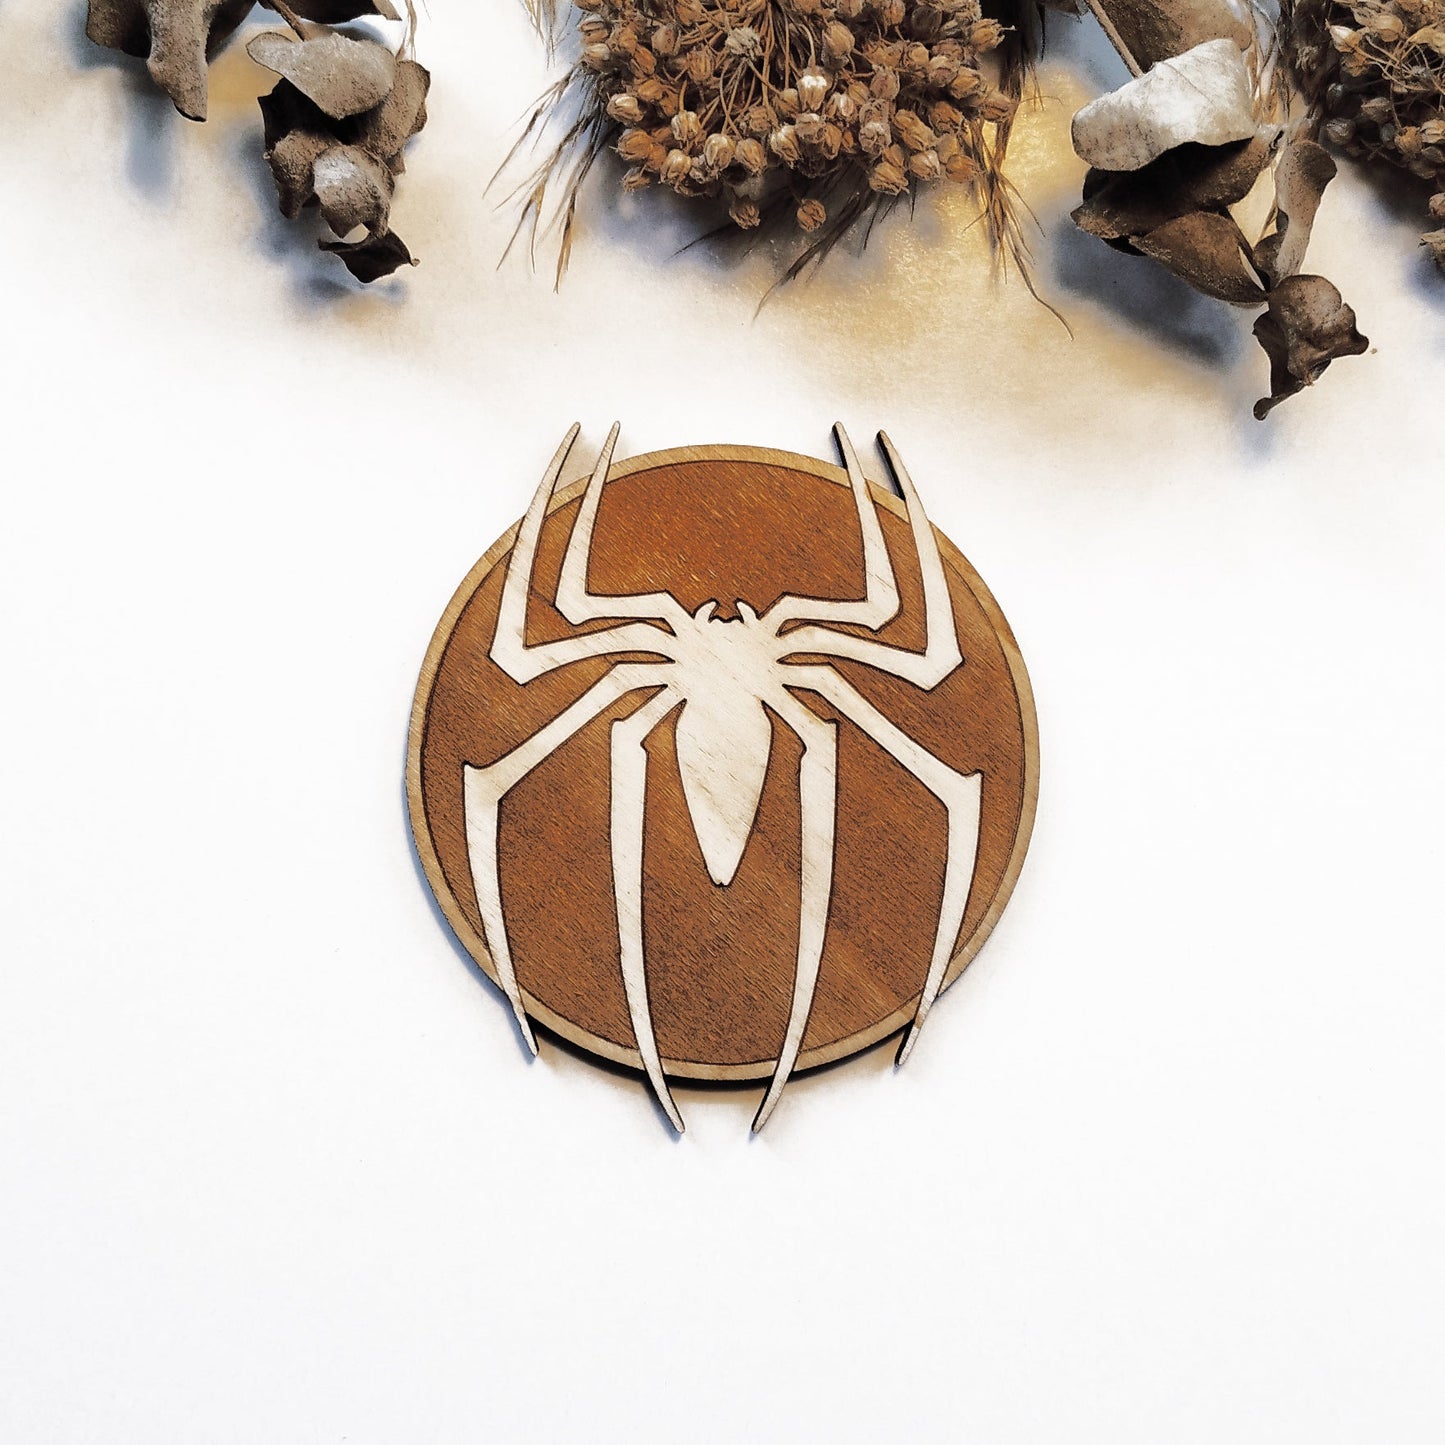 Set of 6 Superheroes Wooden Coasters - Handmade Gift - Housewarming - Wood Kitchenware-4